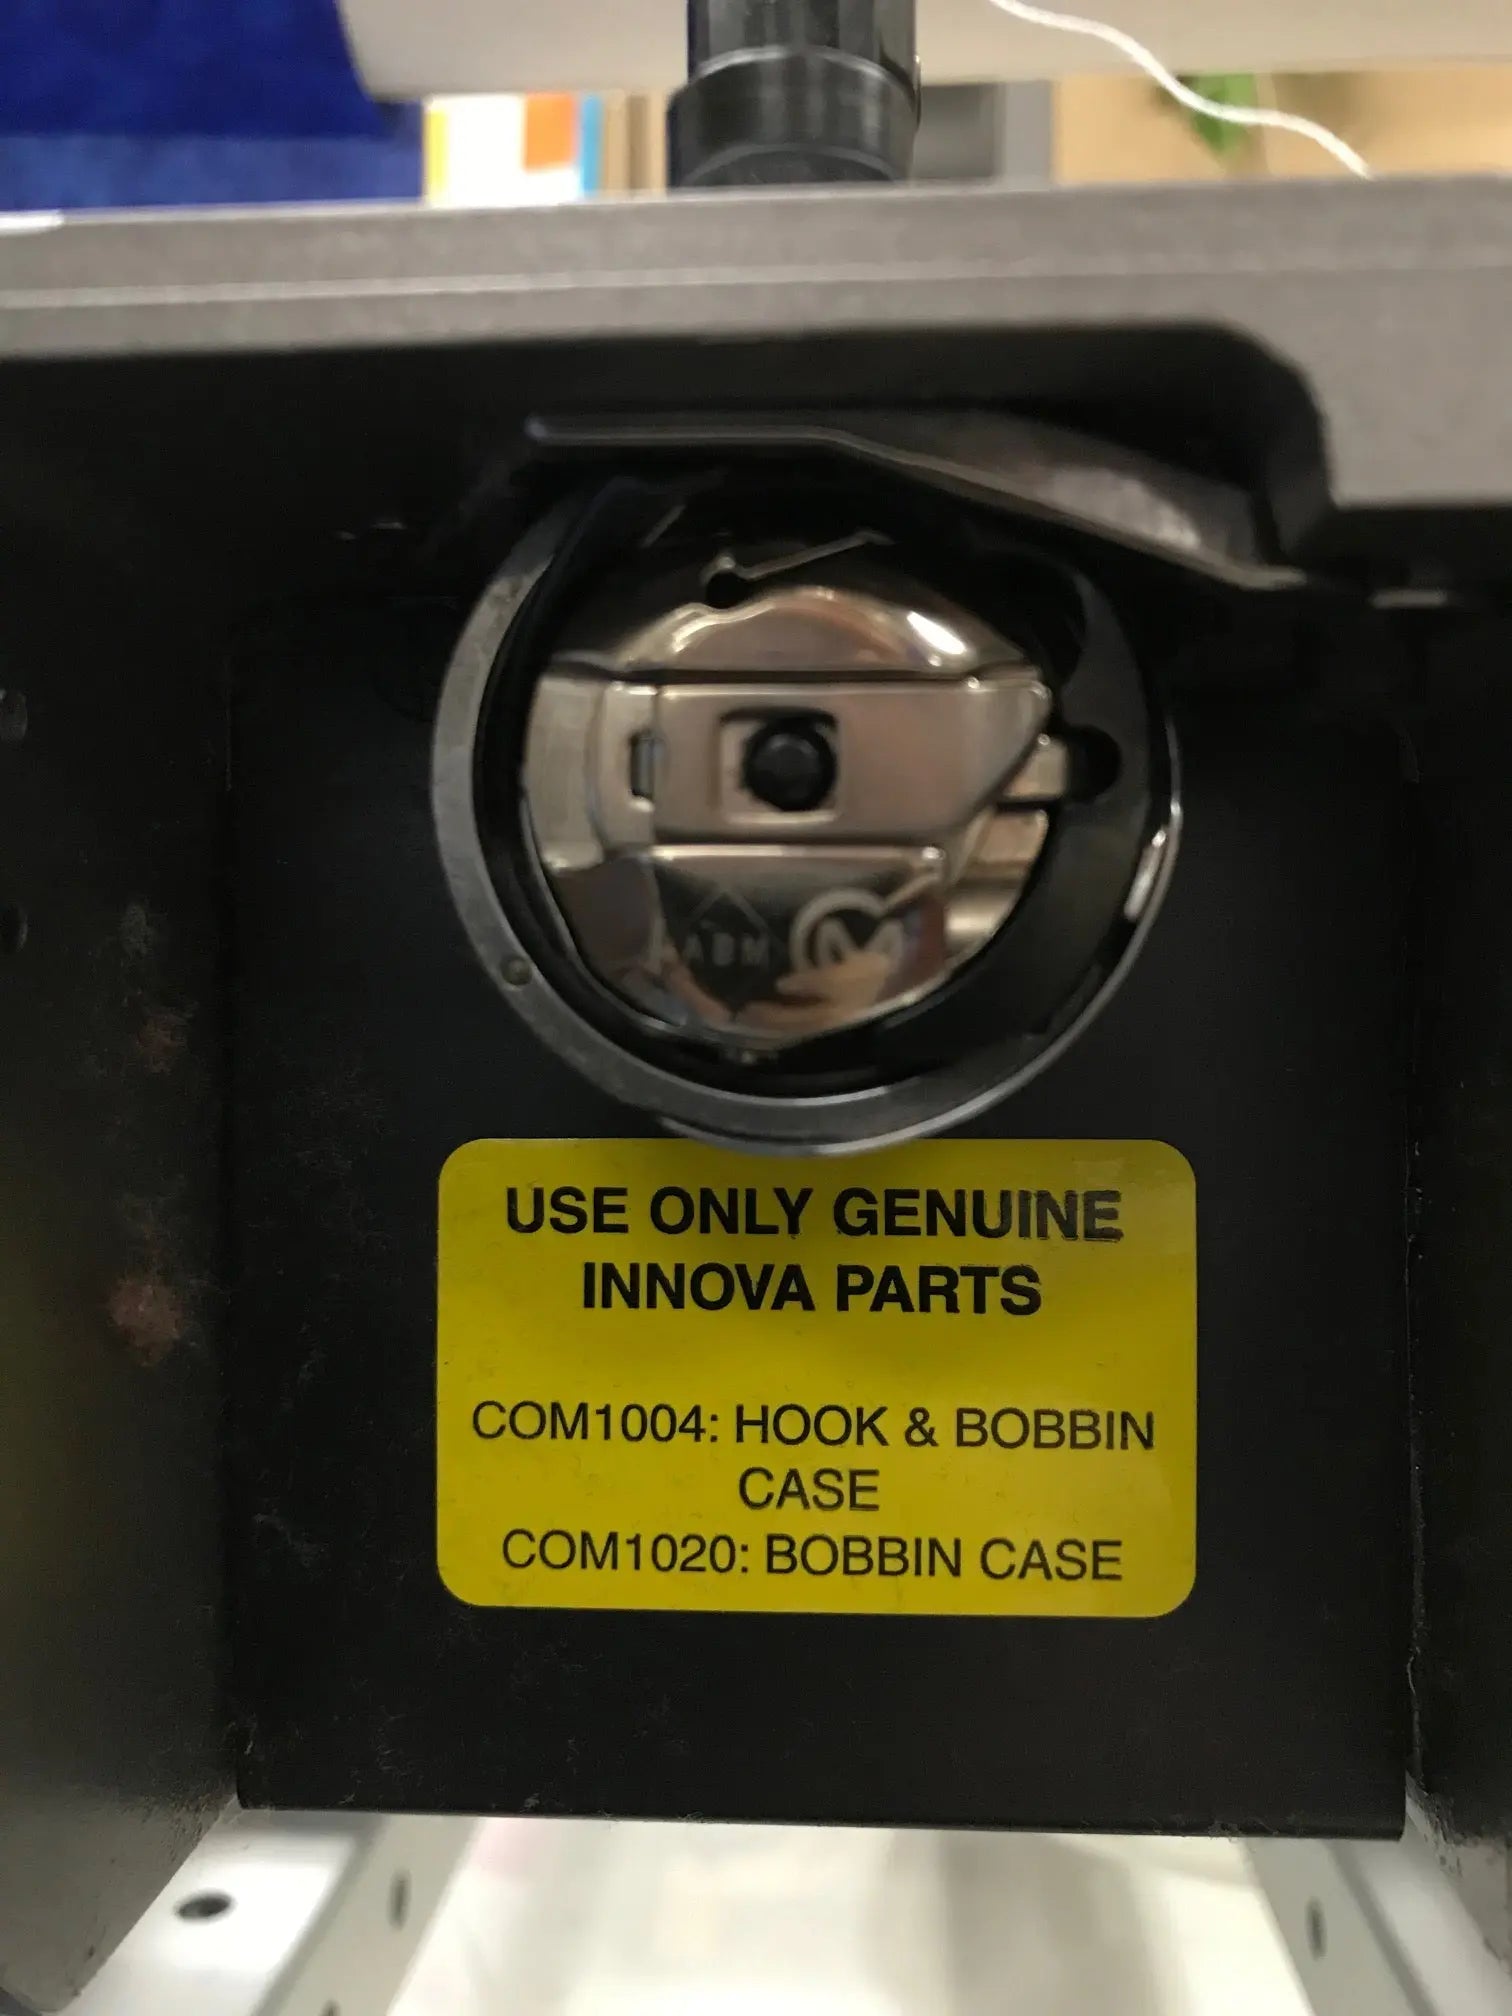 JP Style Bobbin Case for INNOVA Machines